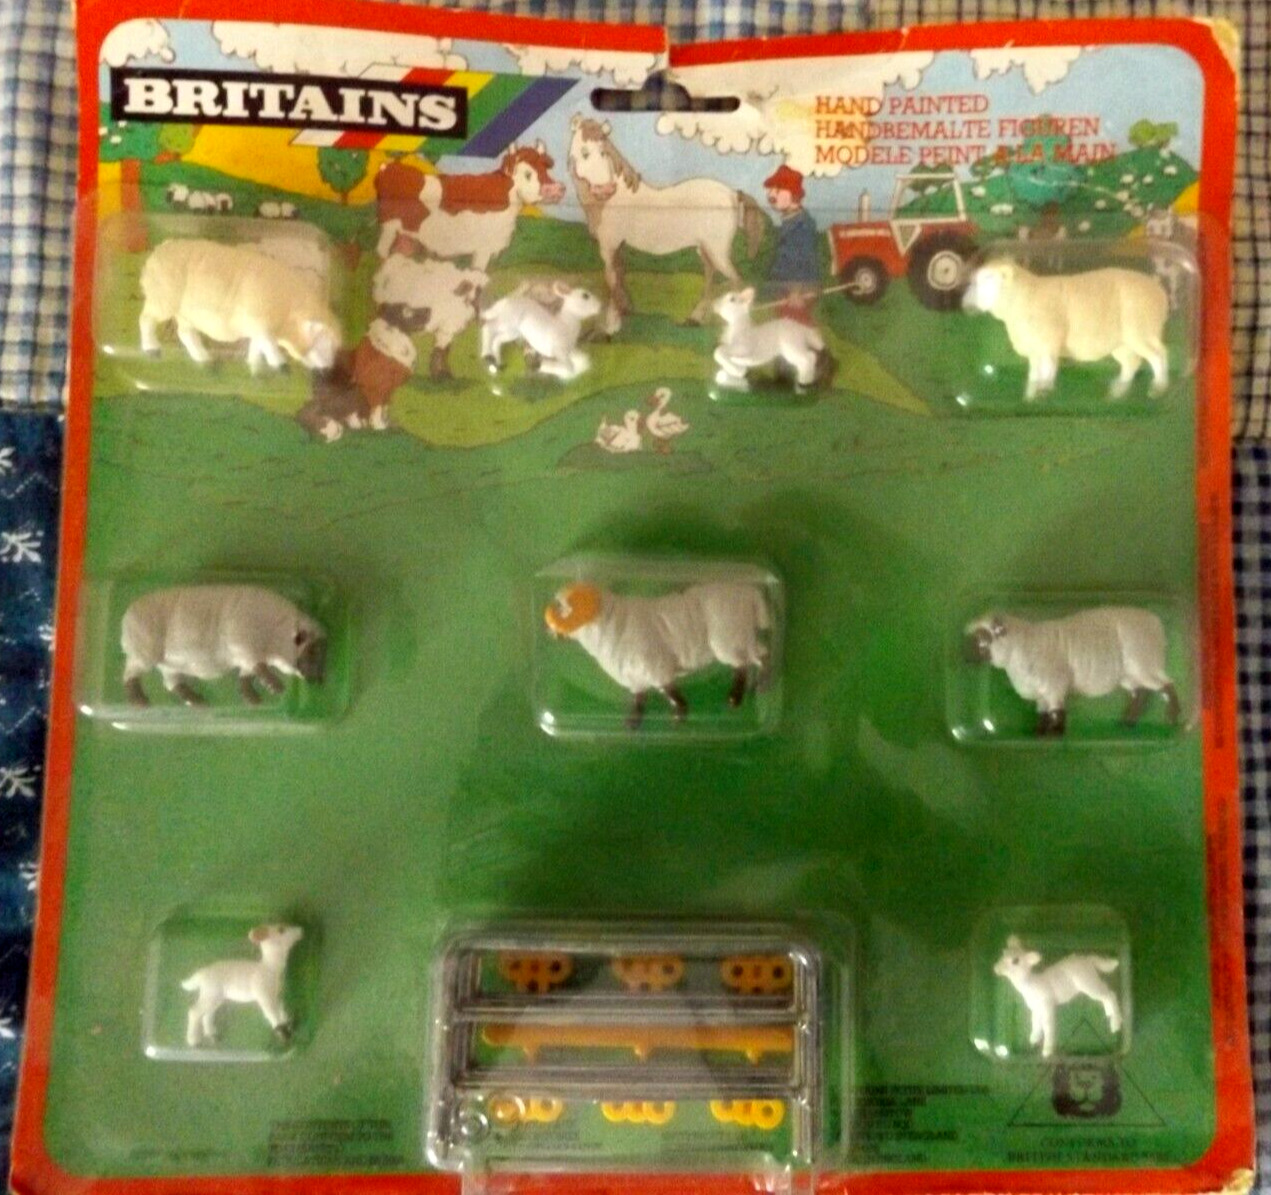 VINTAGE Britains 7169 Plastic Farm Animals On Card - New Old Stock